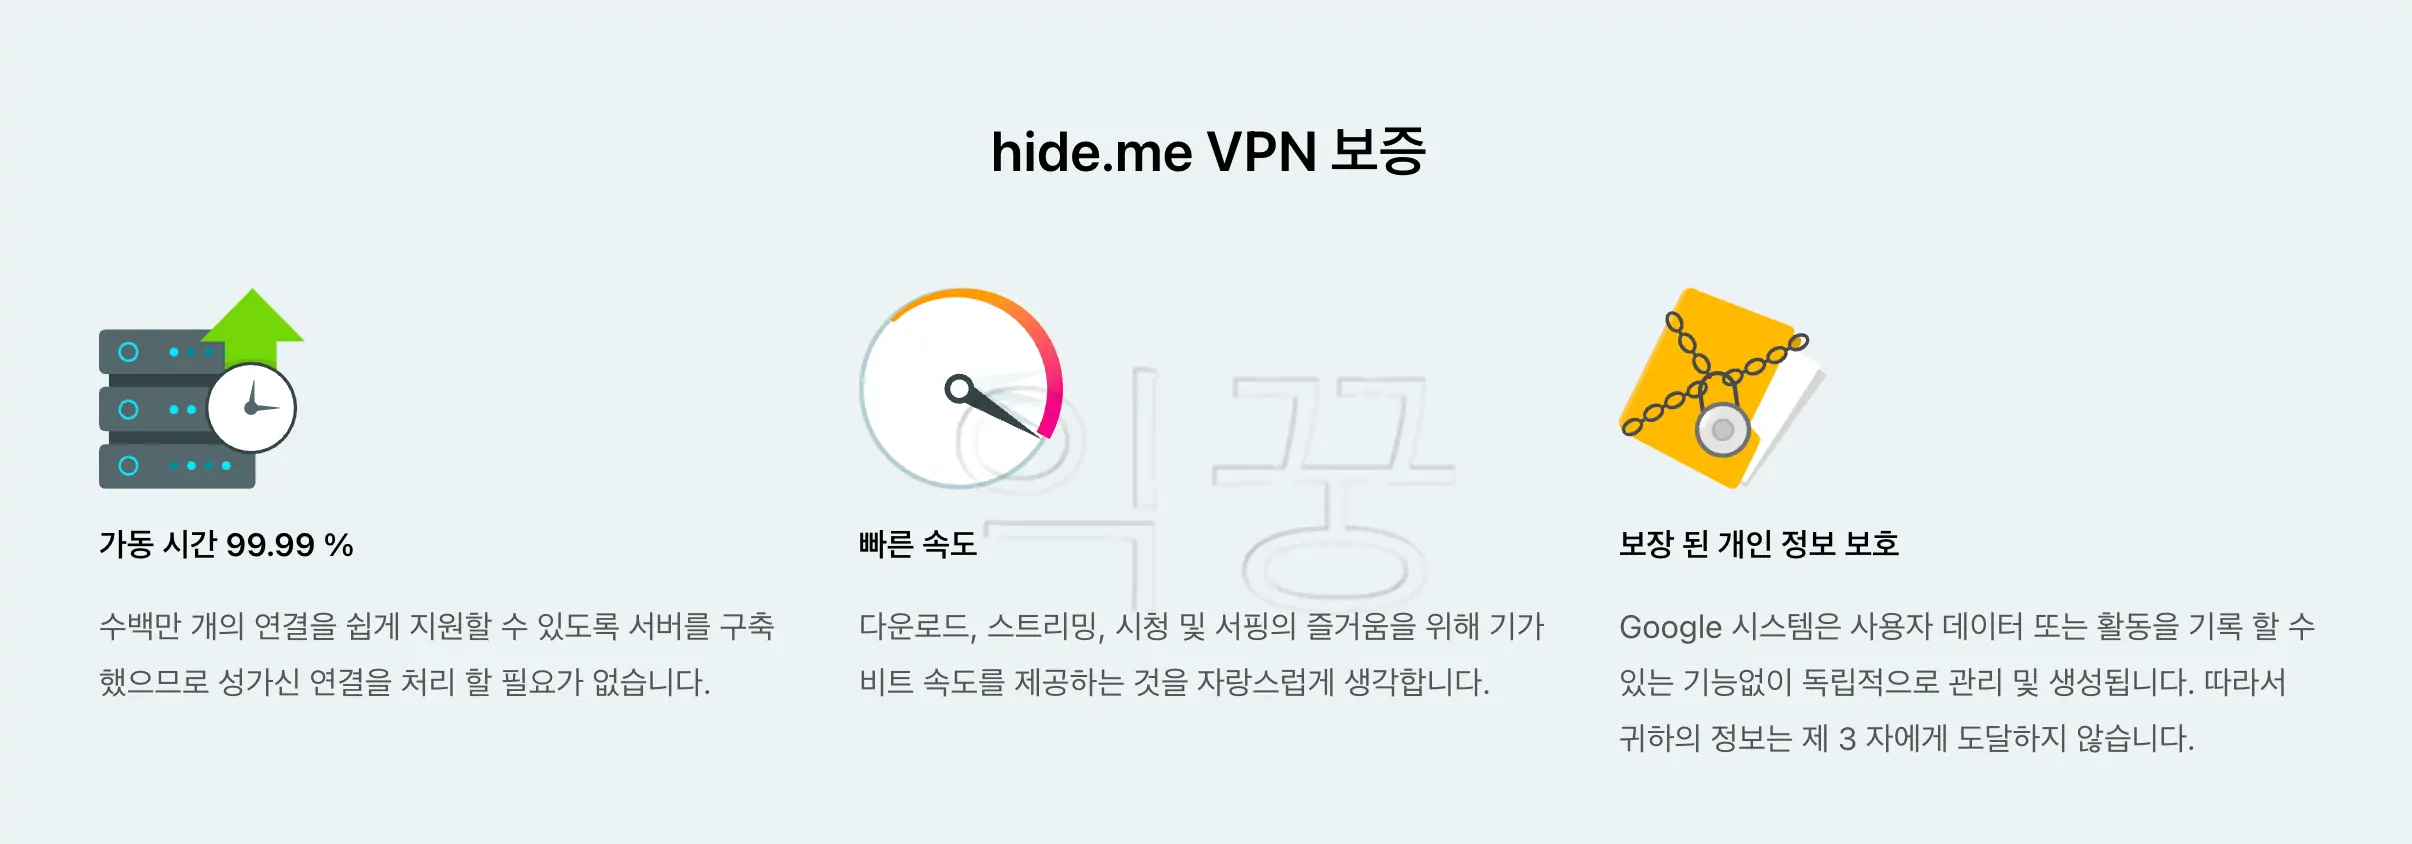 HIDE.ME VPN 장점 세 가지 사진